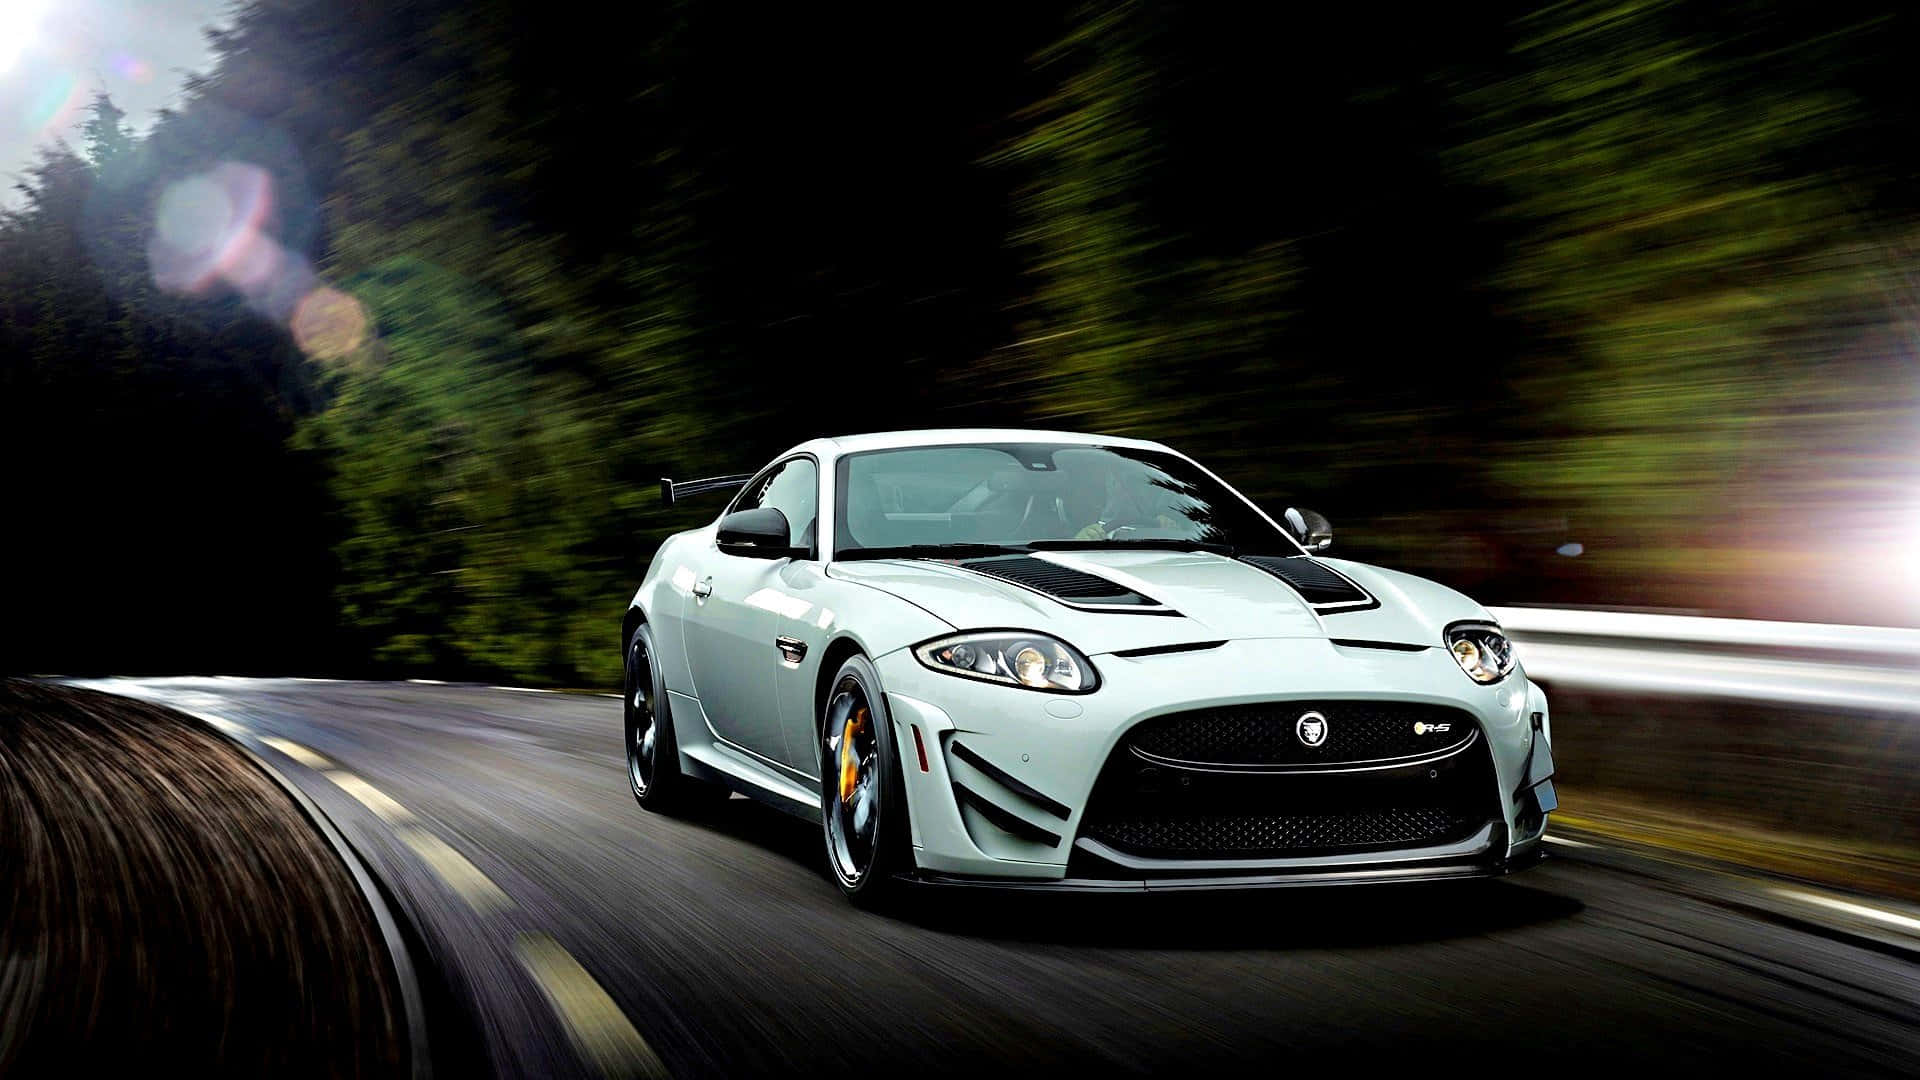 Sleek Jaguar XKR in Action Wallpaper